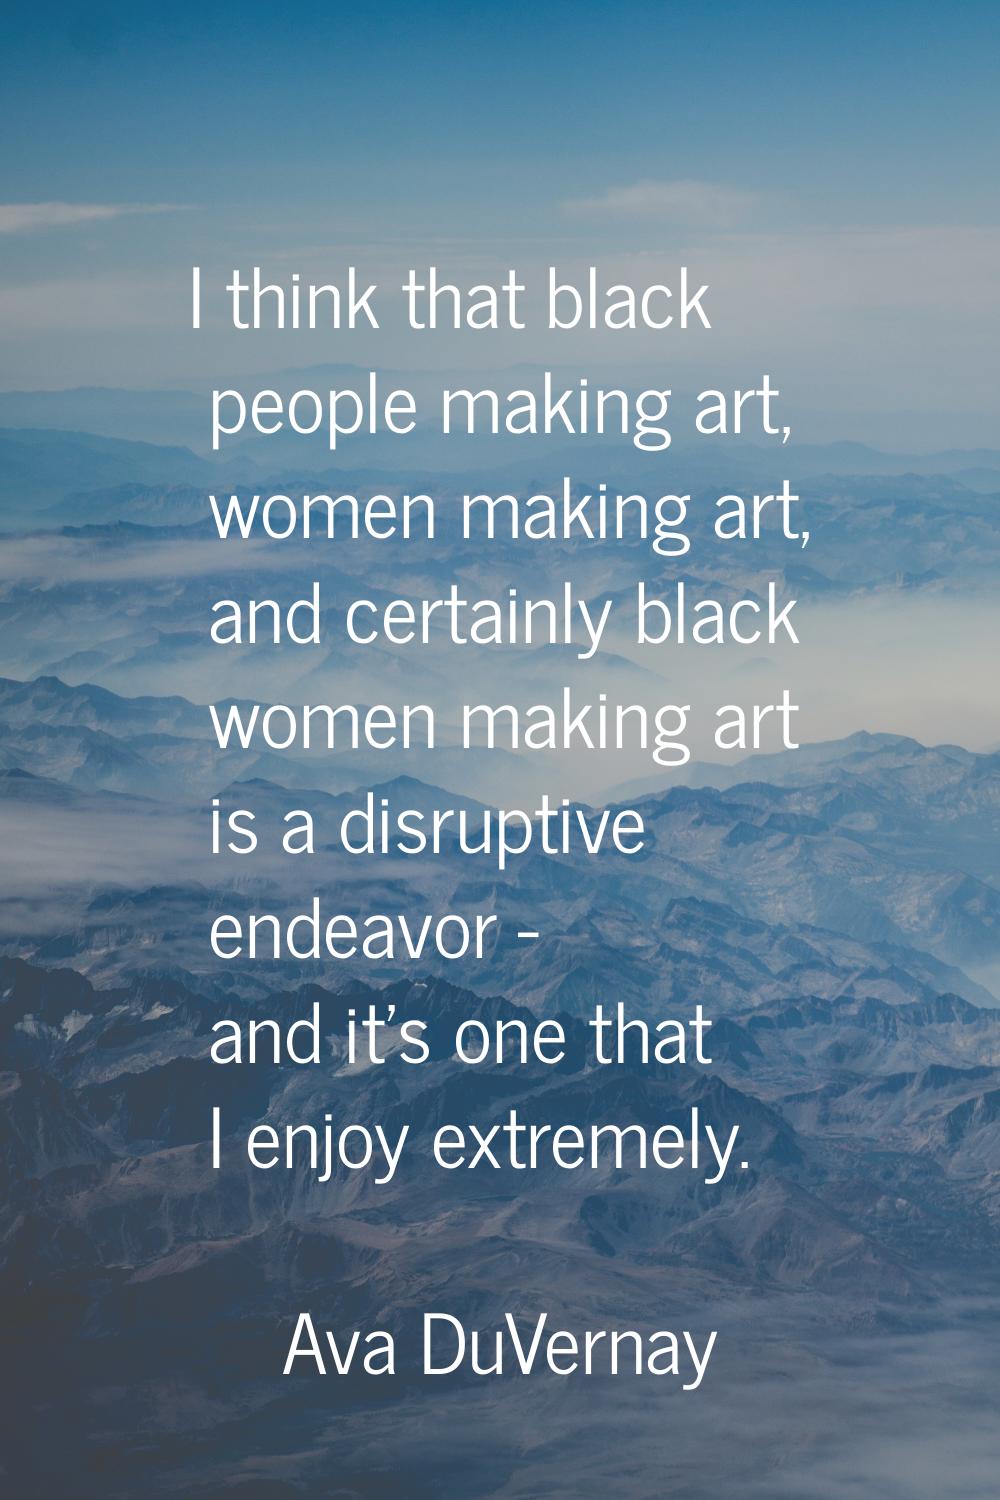 I think that black people making art, women making art, and certainly black women making art is a d